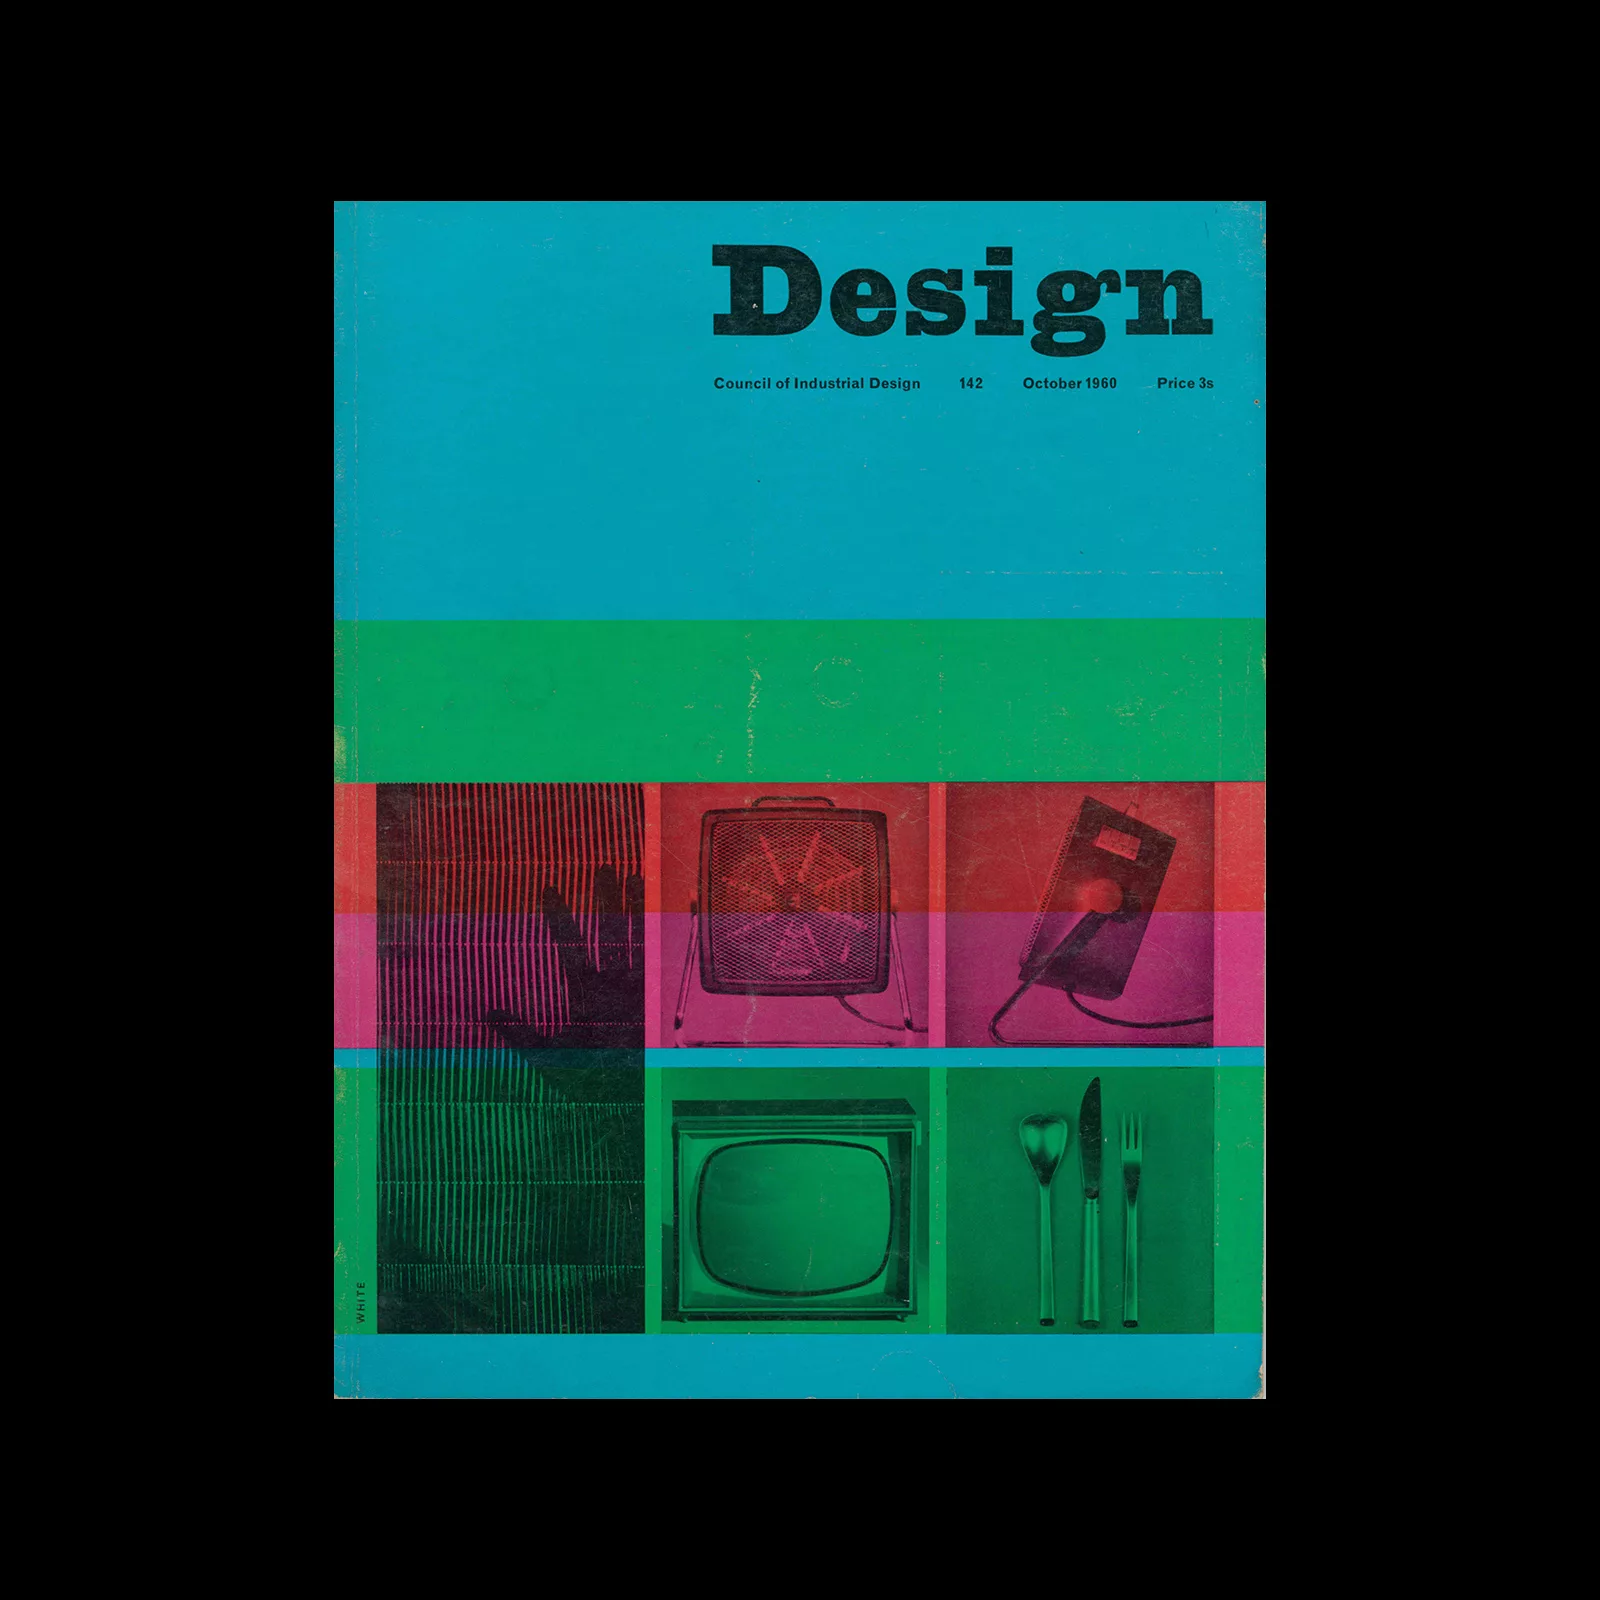 Design, Council of Industrial Design, 142, October 1960